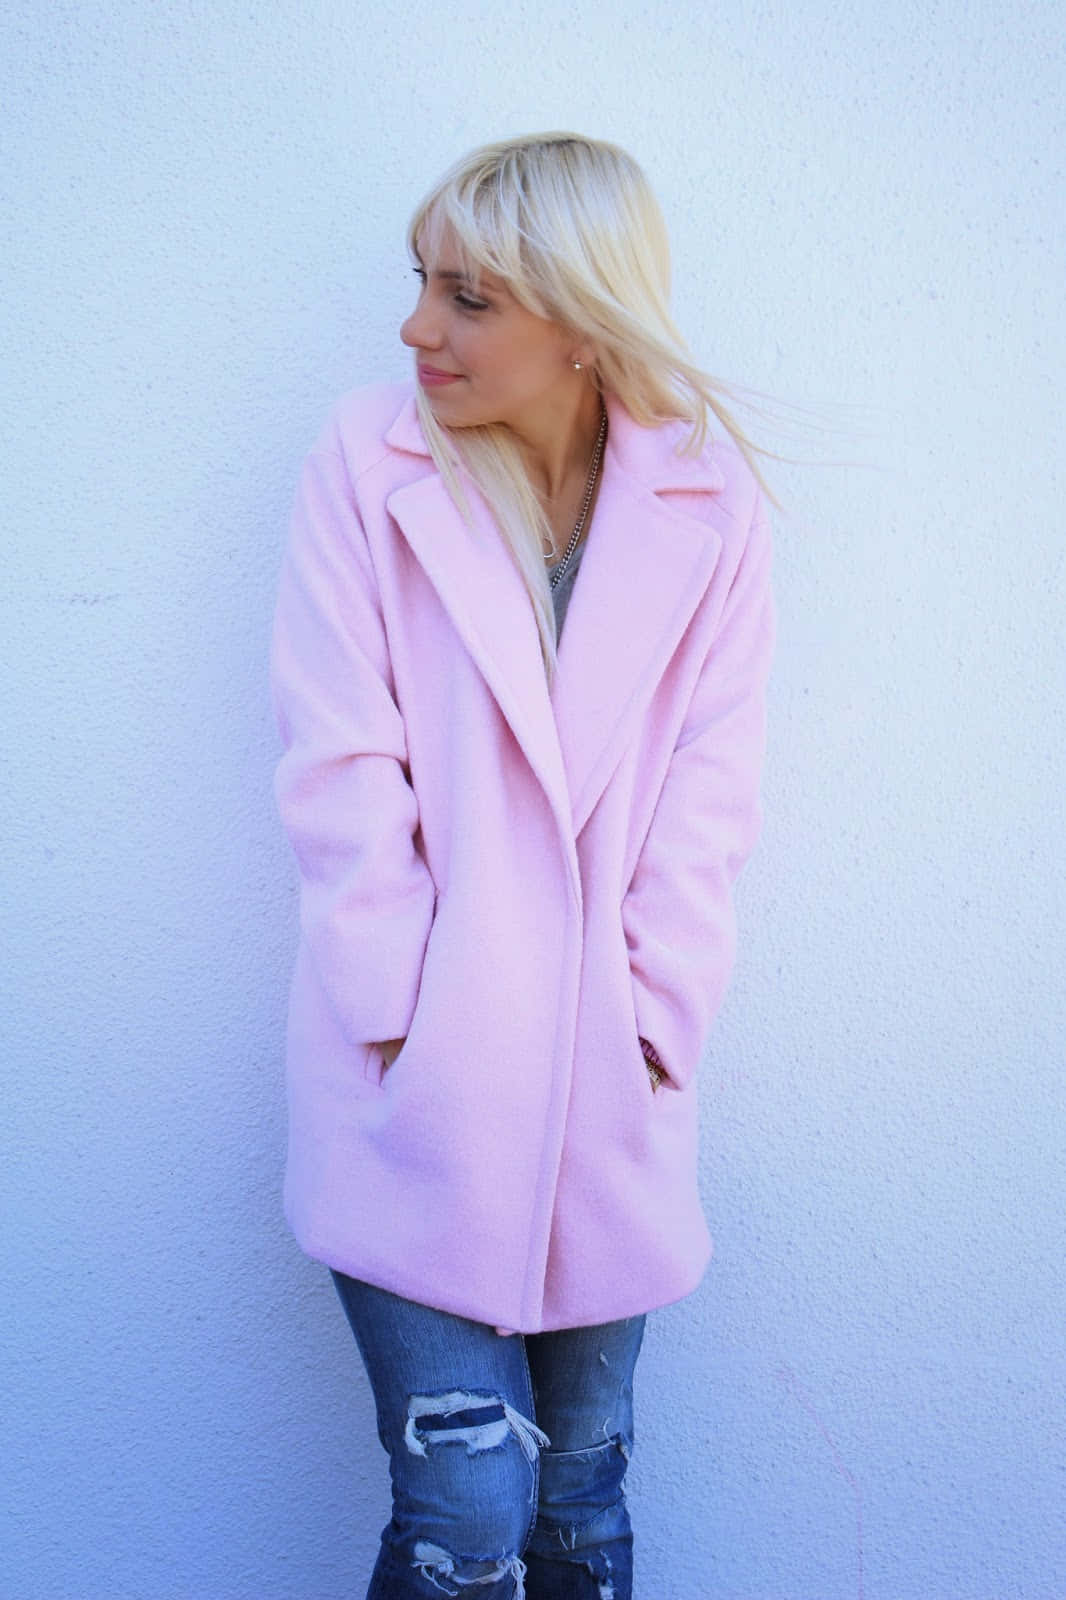 Stylish woman in elegant pink coat Wallpaper